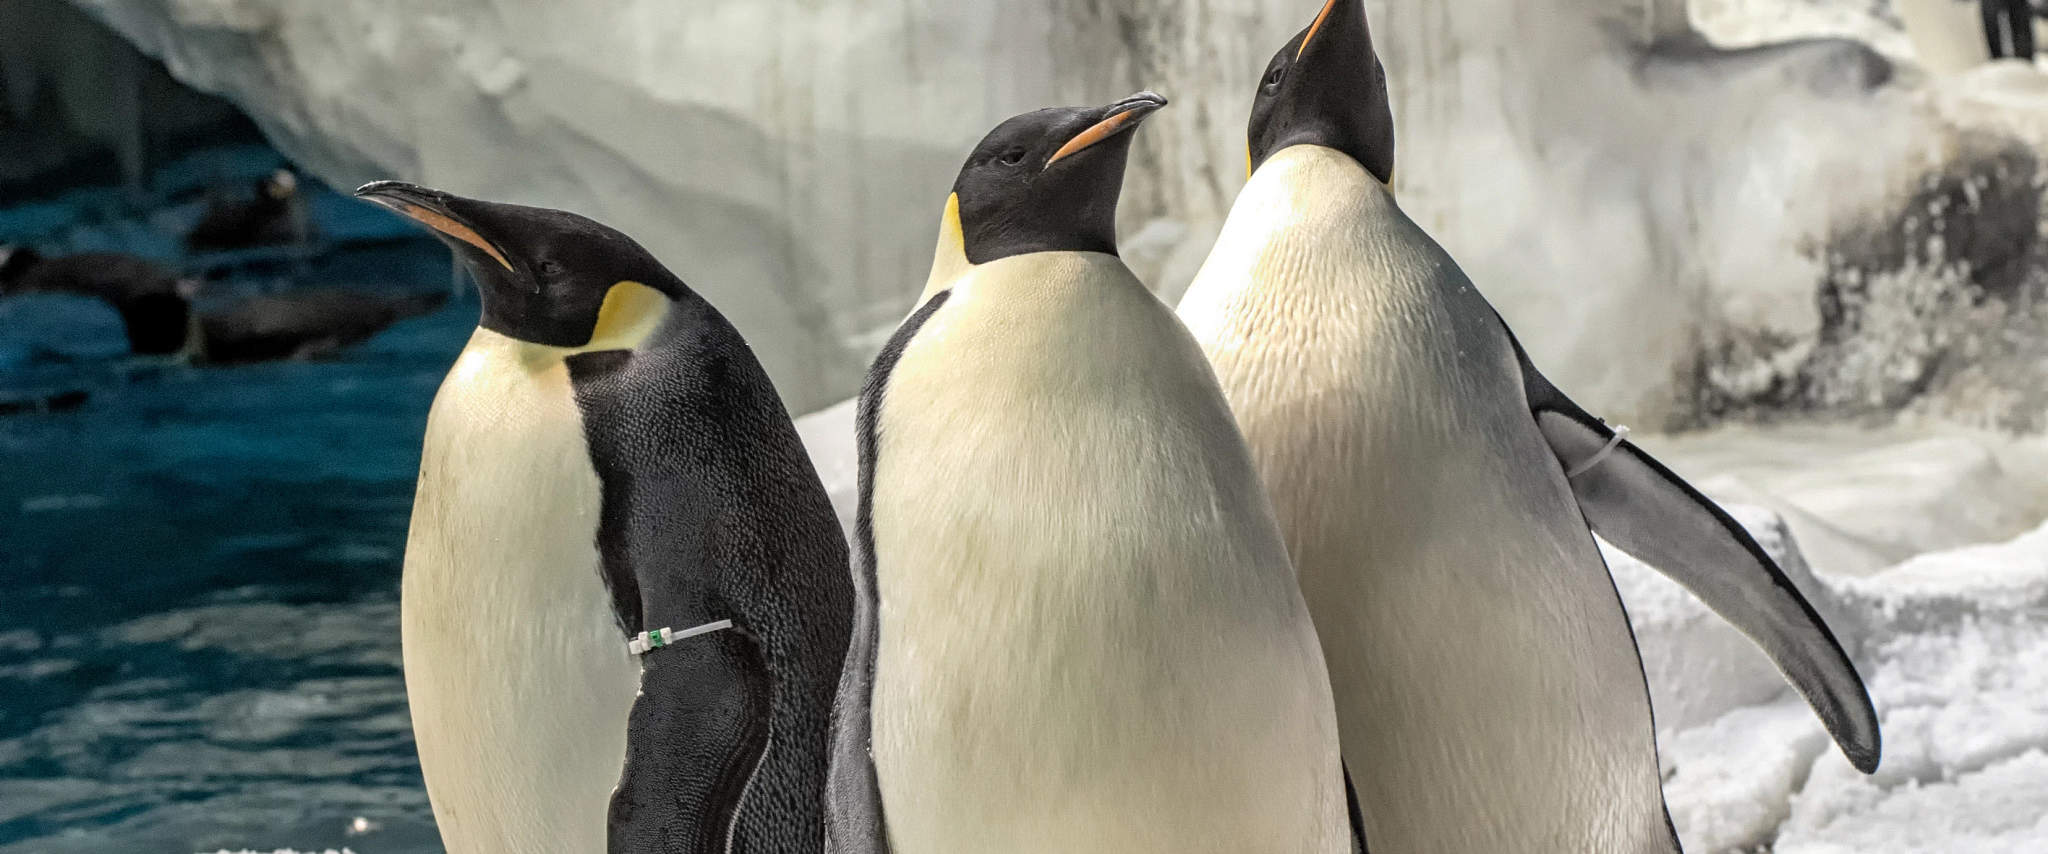 Penguins standing